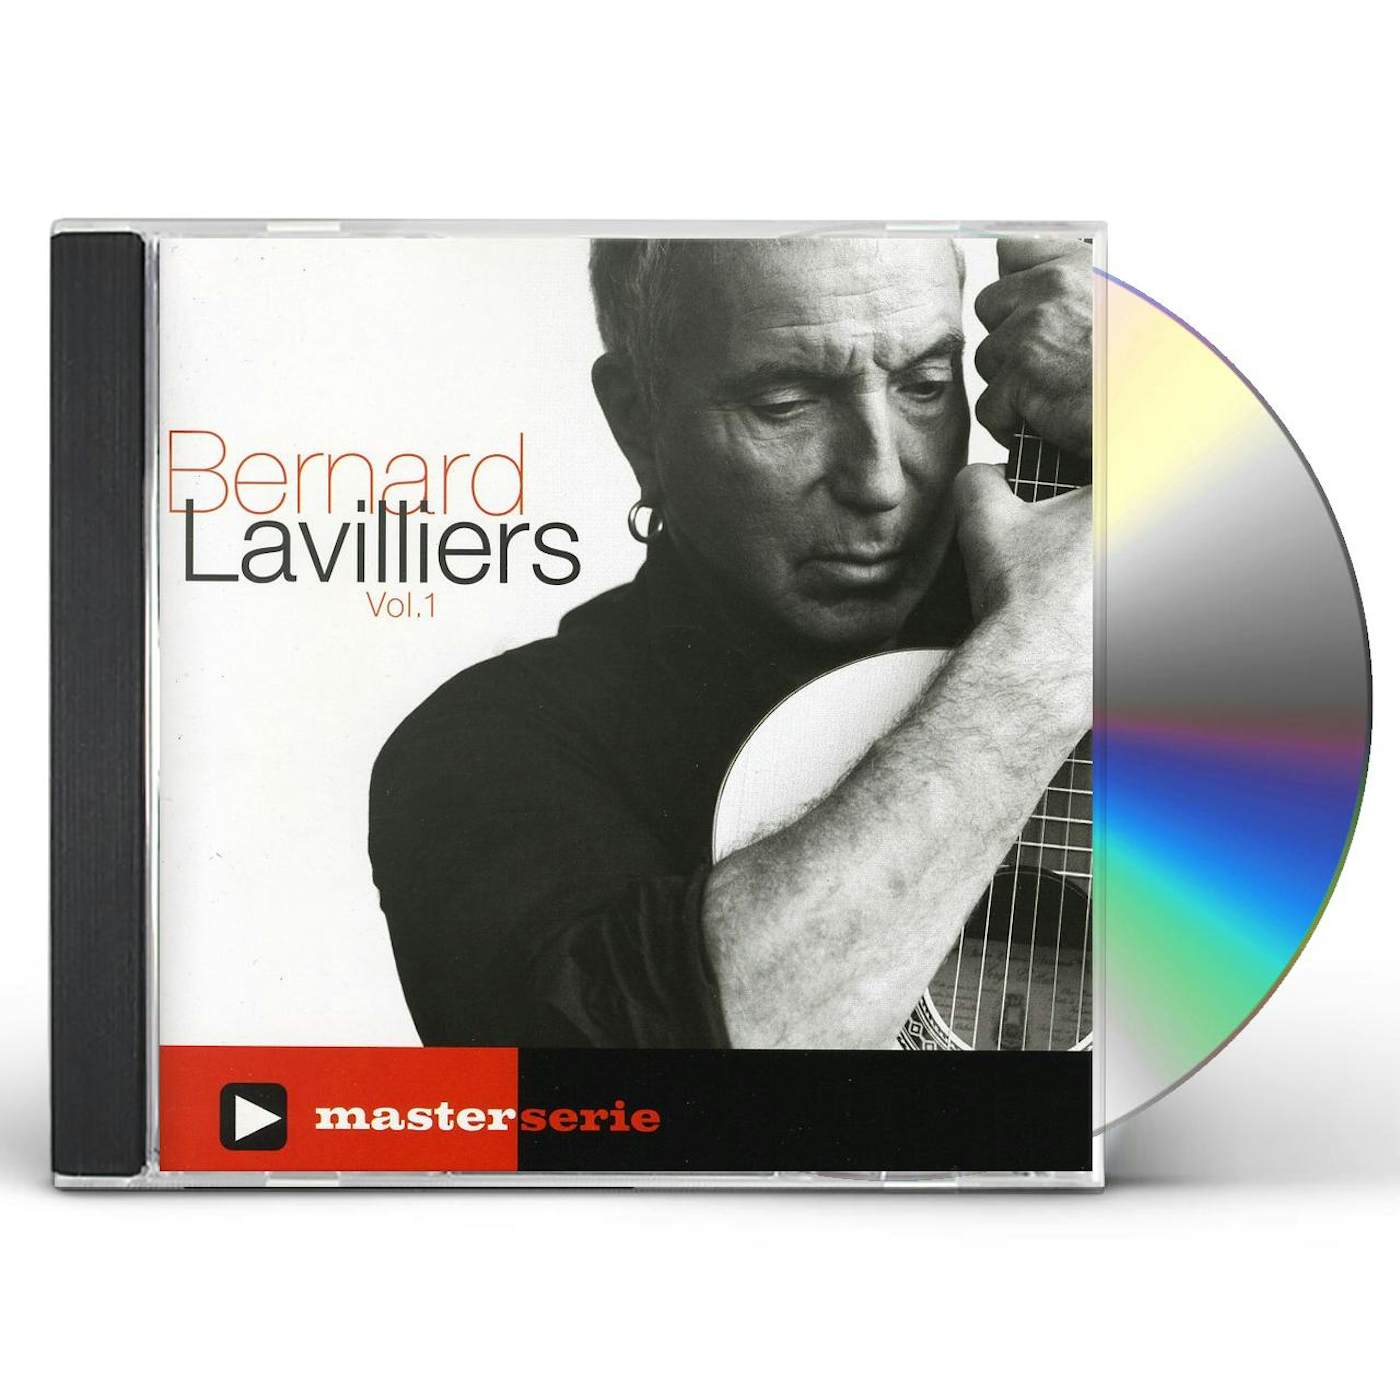 Bernard Lavilliers MASTER SERIE 1 CD